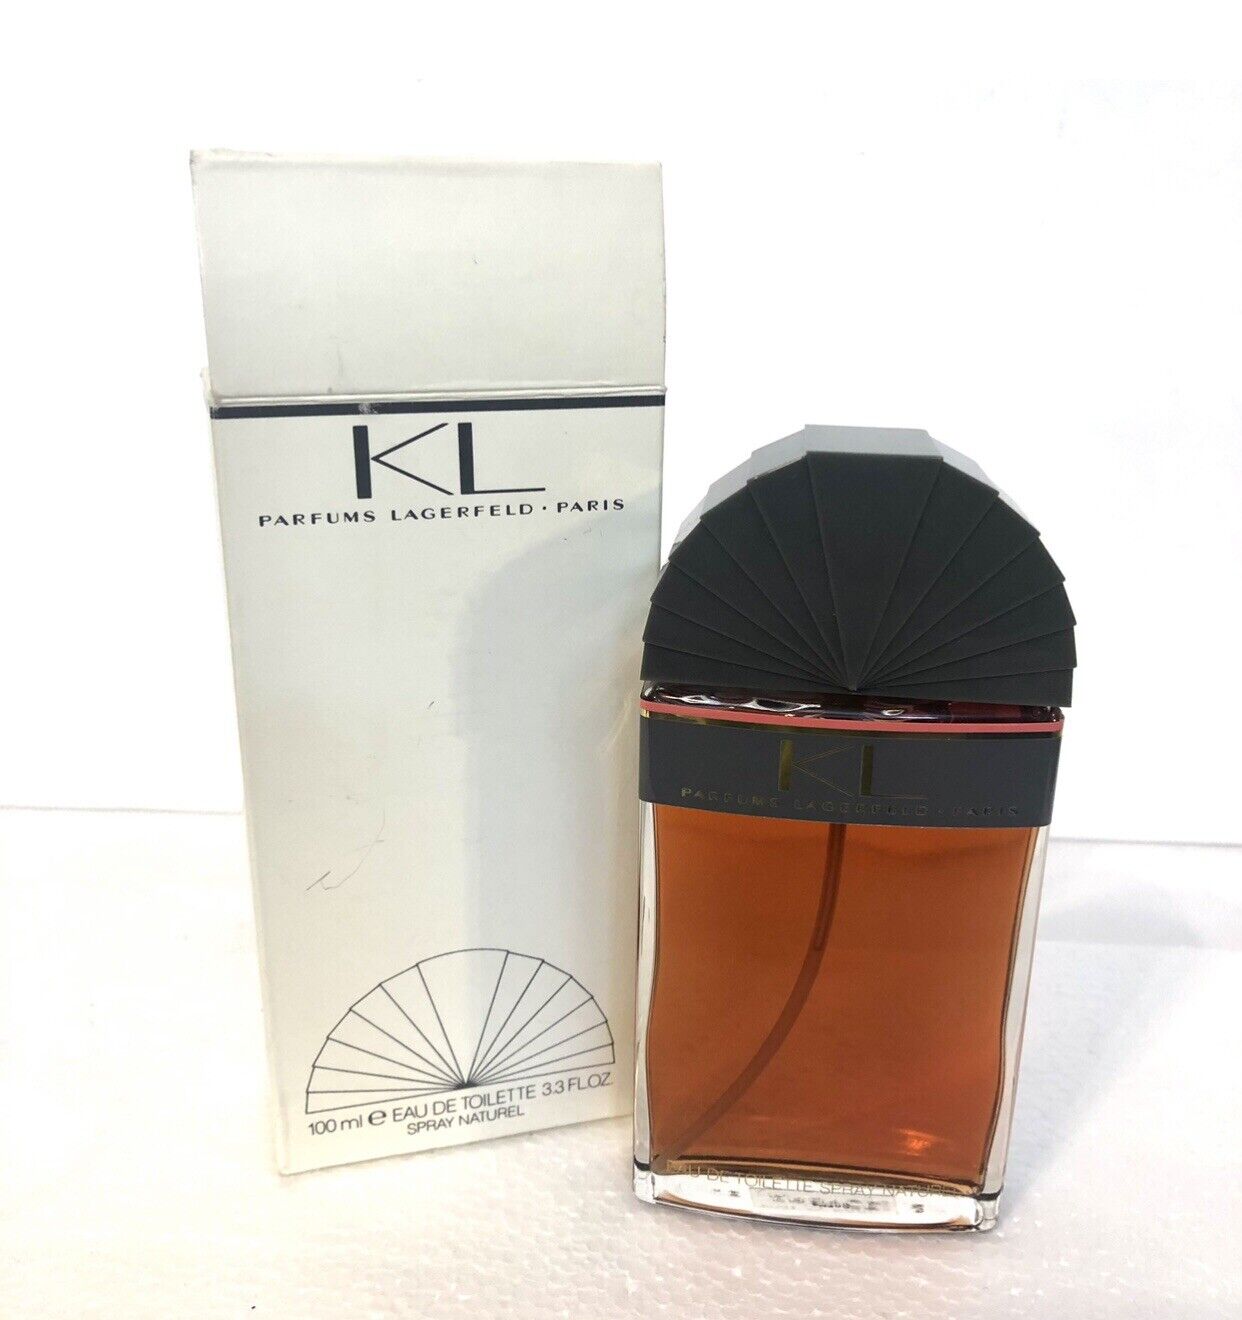 Karl Lagerfeld  “Hard To Find” Kl Eau de Toilette Spray 100 ml New With Box